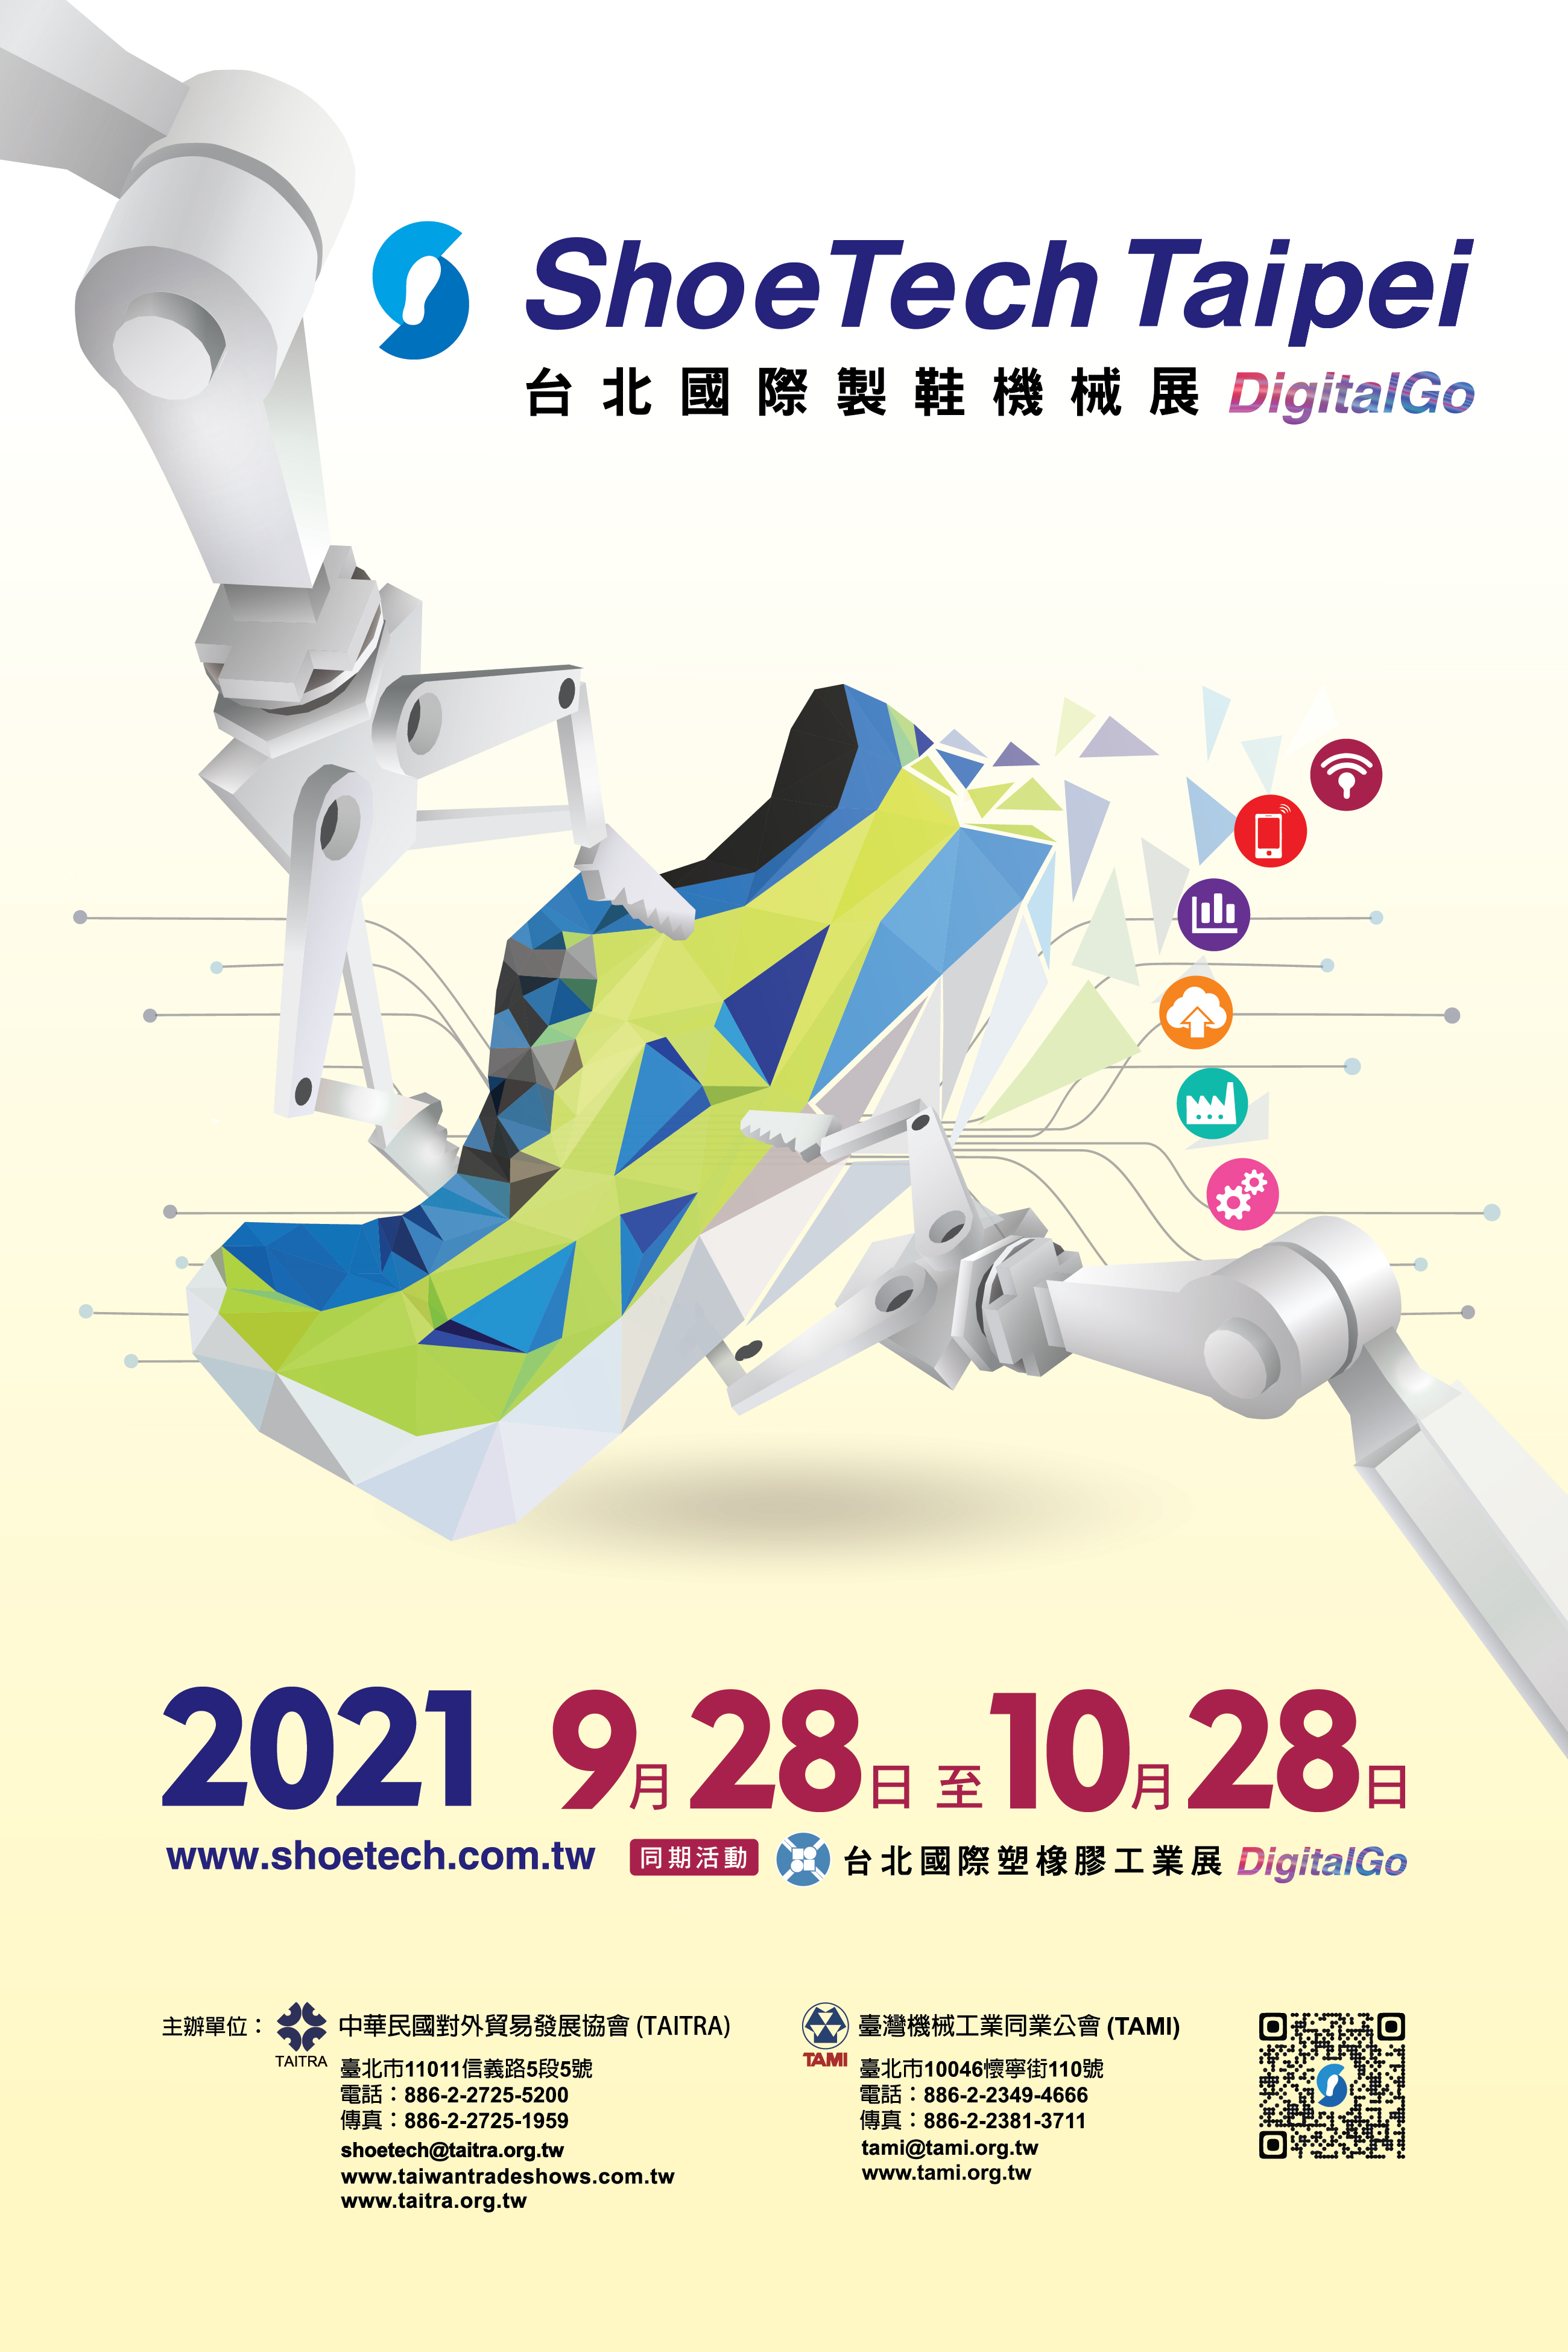 Shoe Tech Taipei Digital Go